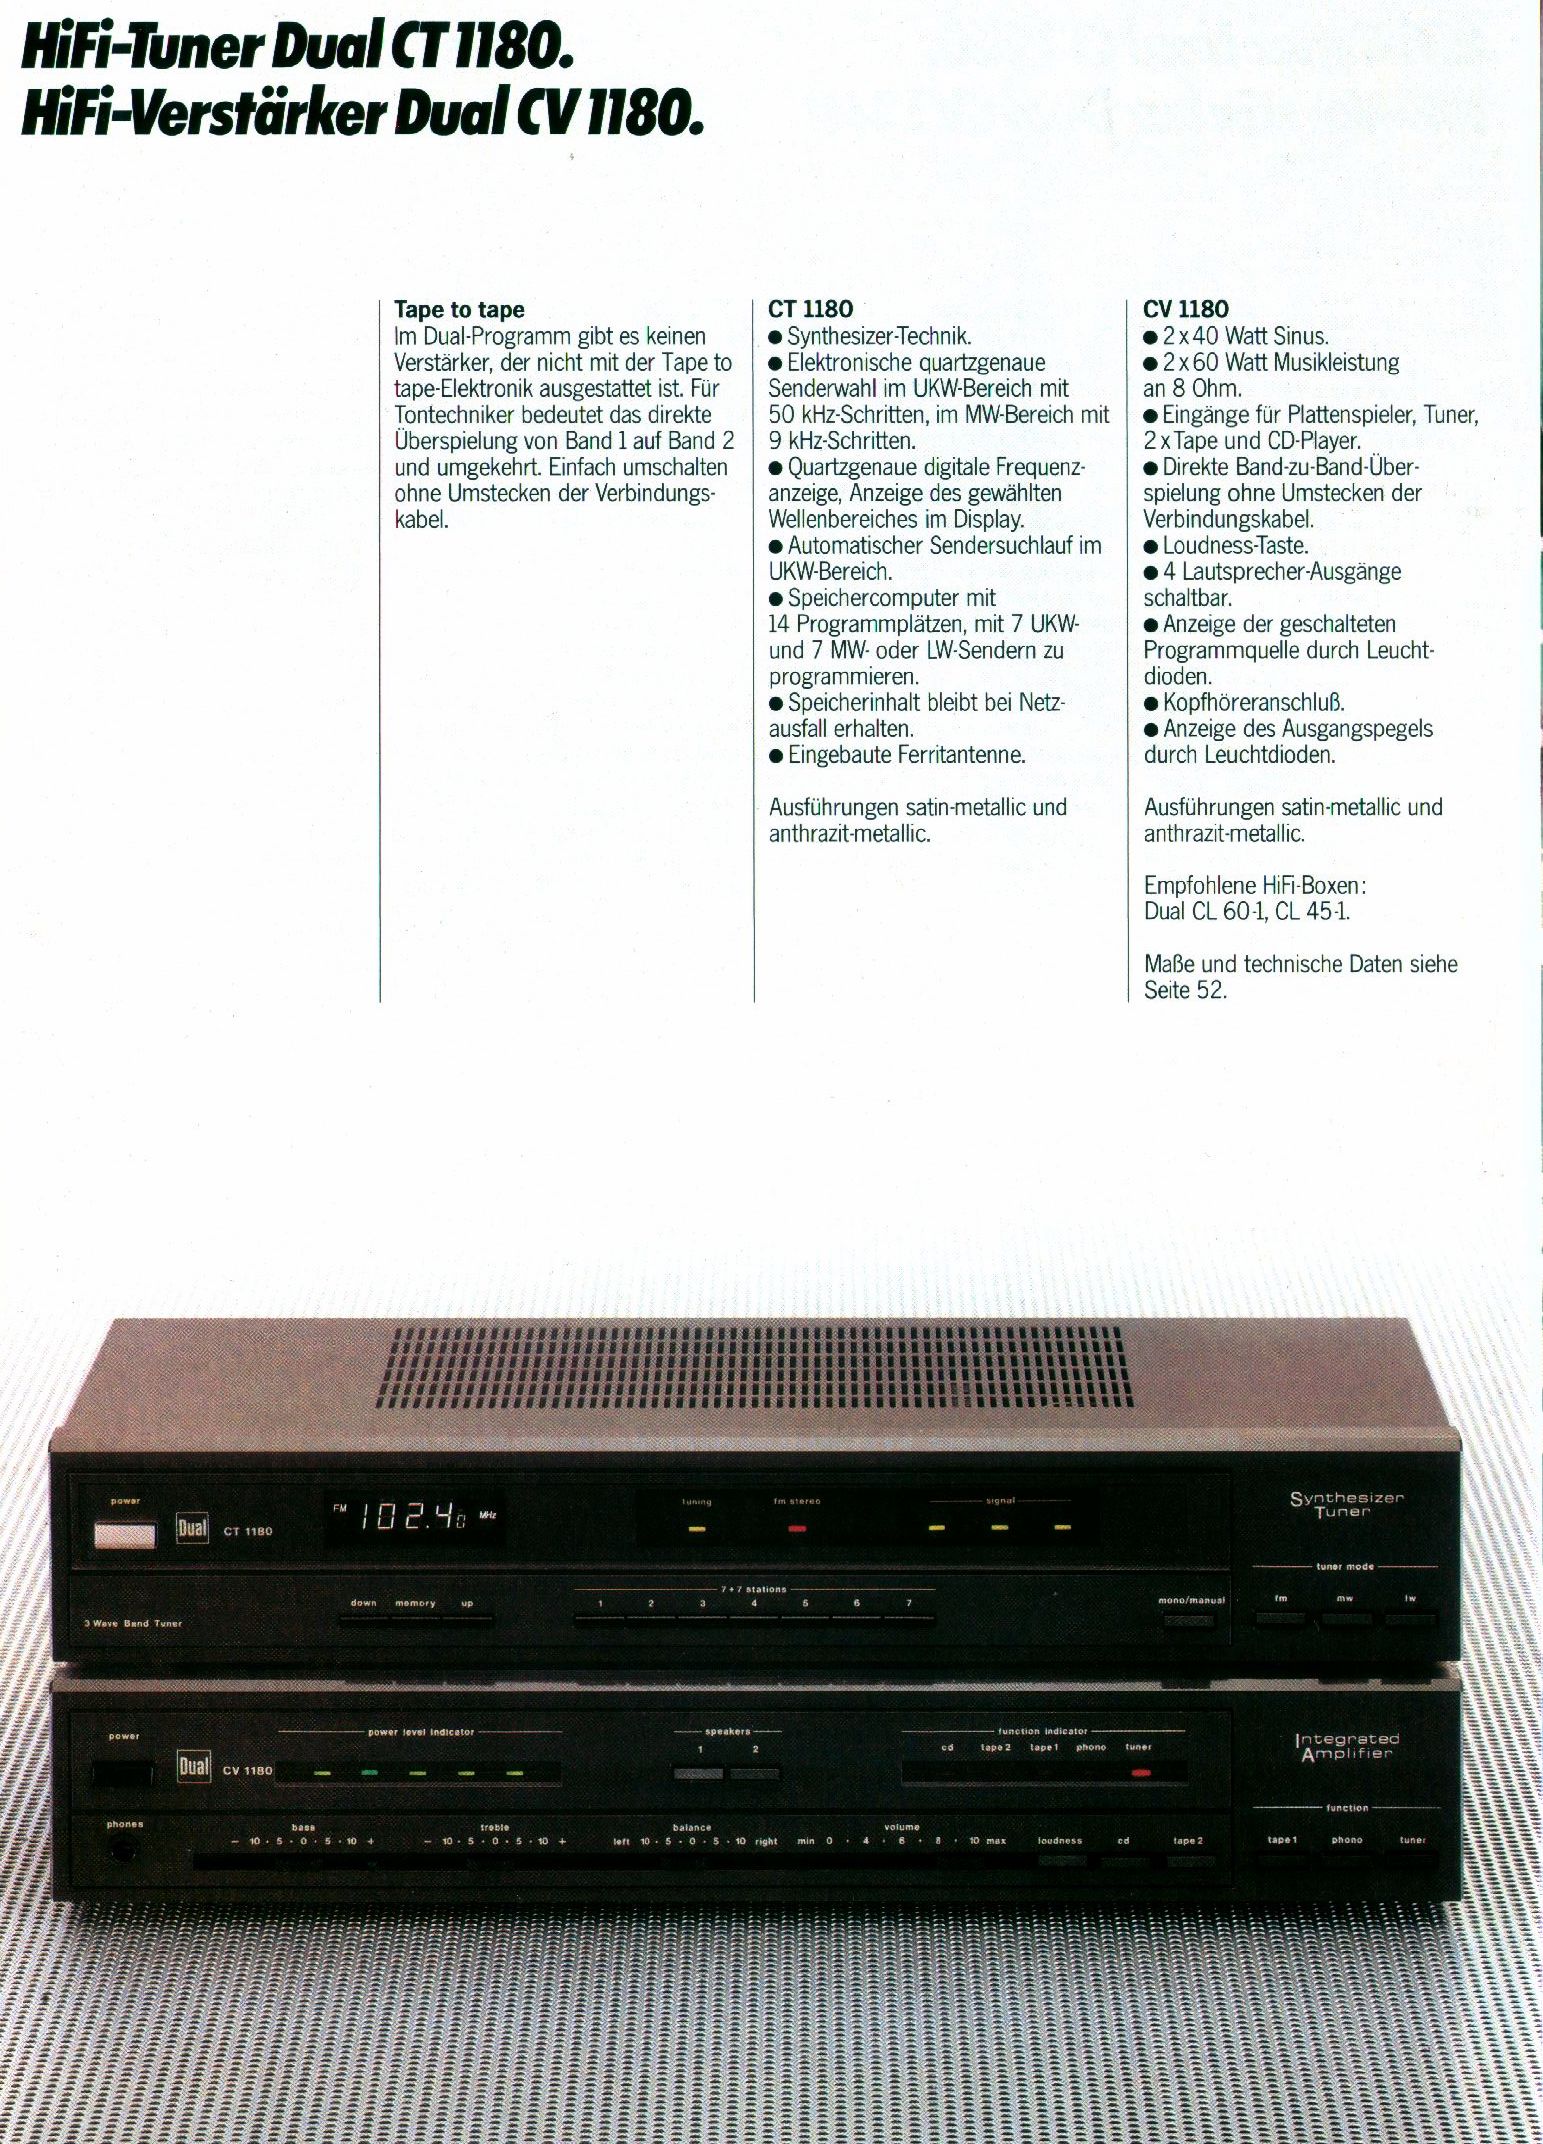 Dual CT-CV-1180-Prospekt-1985.jpg